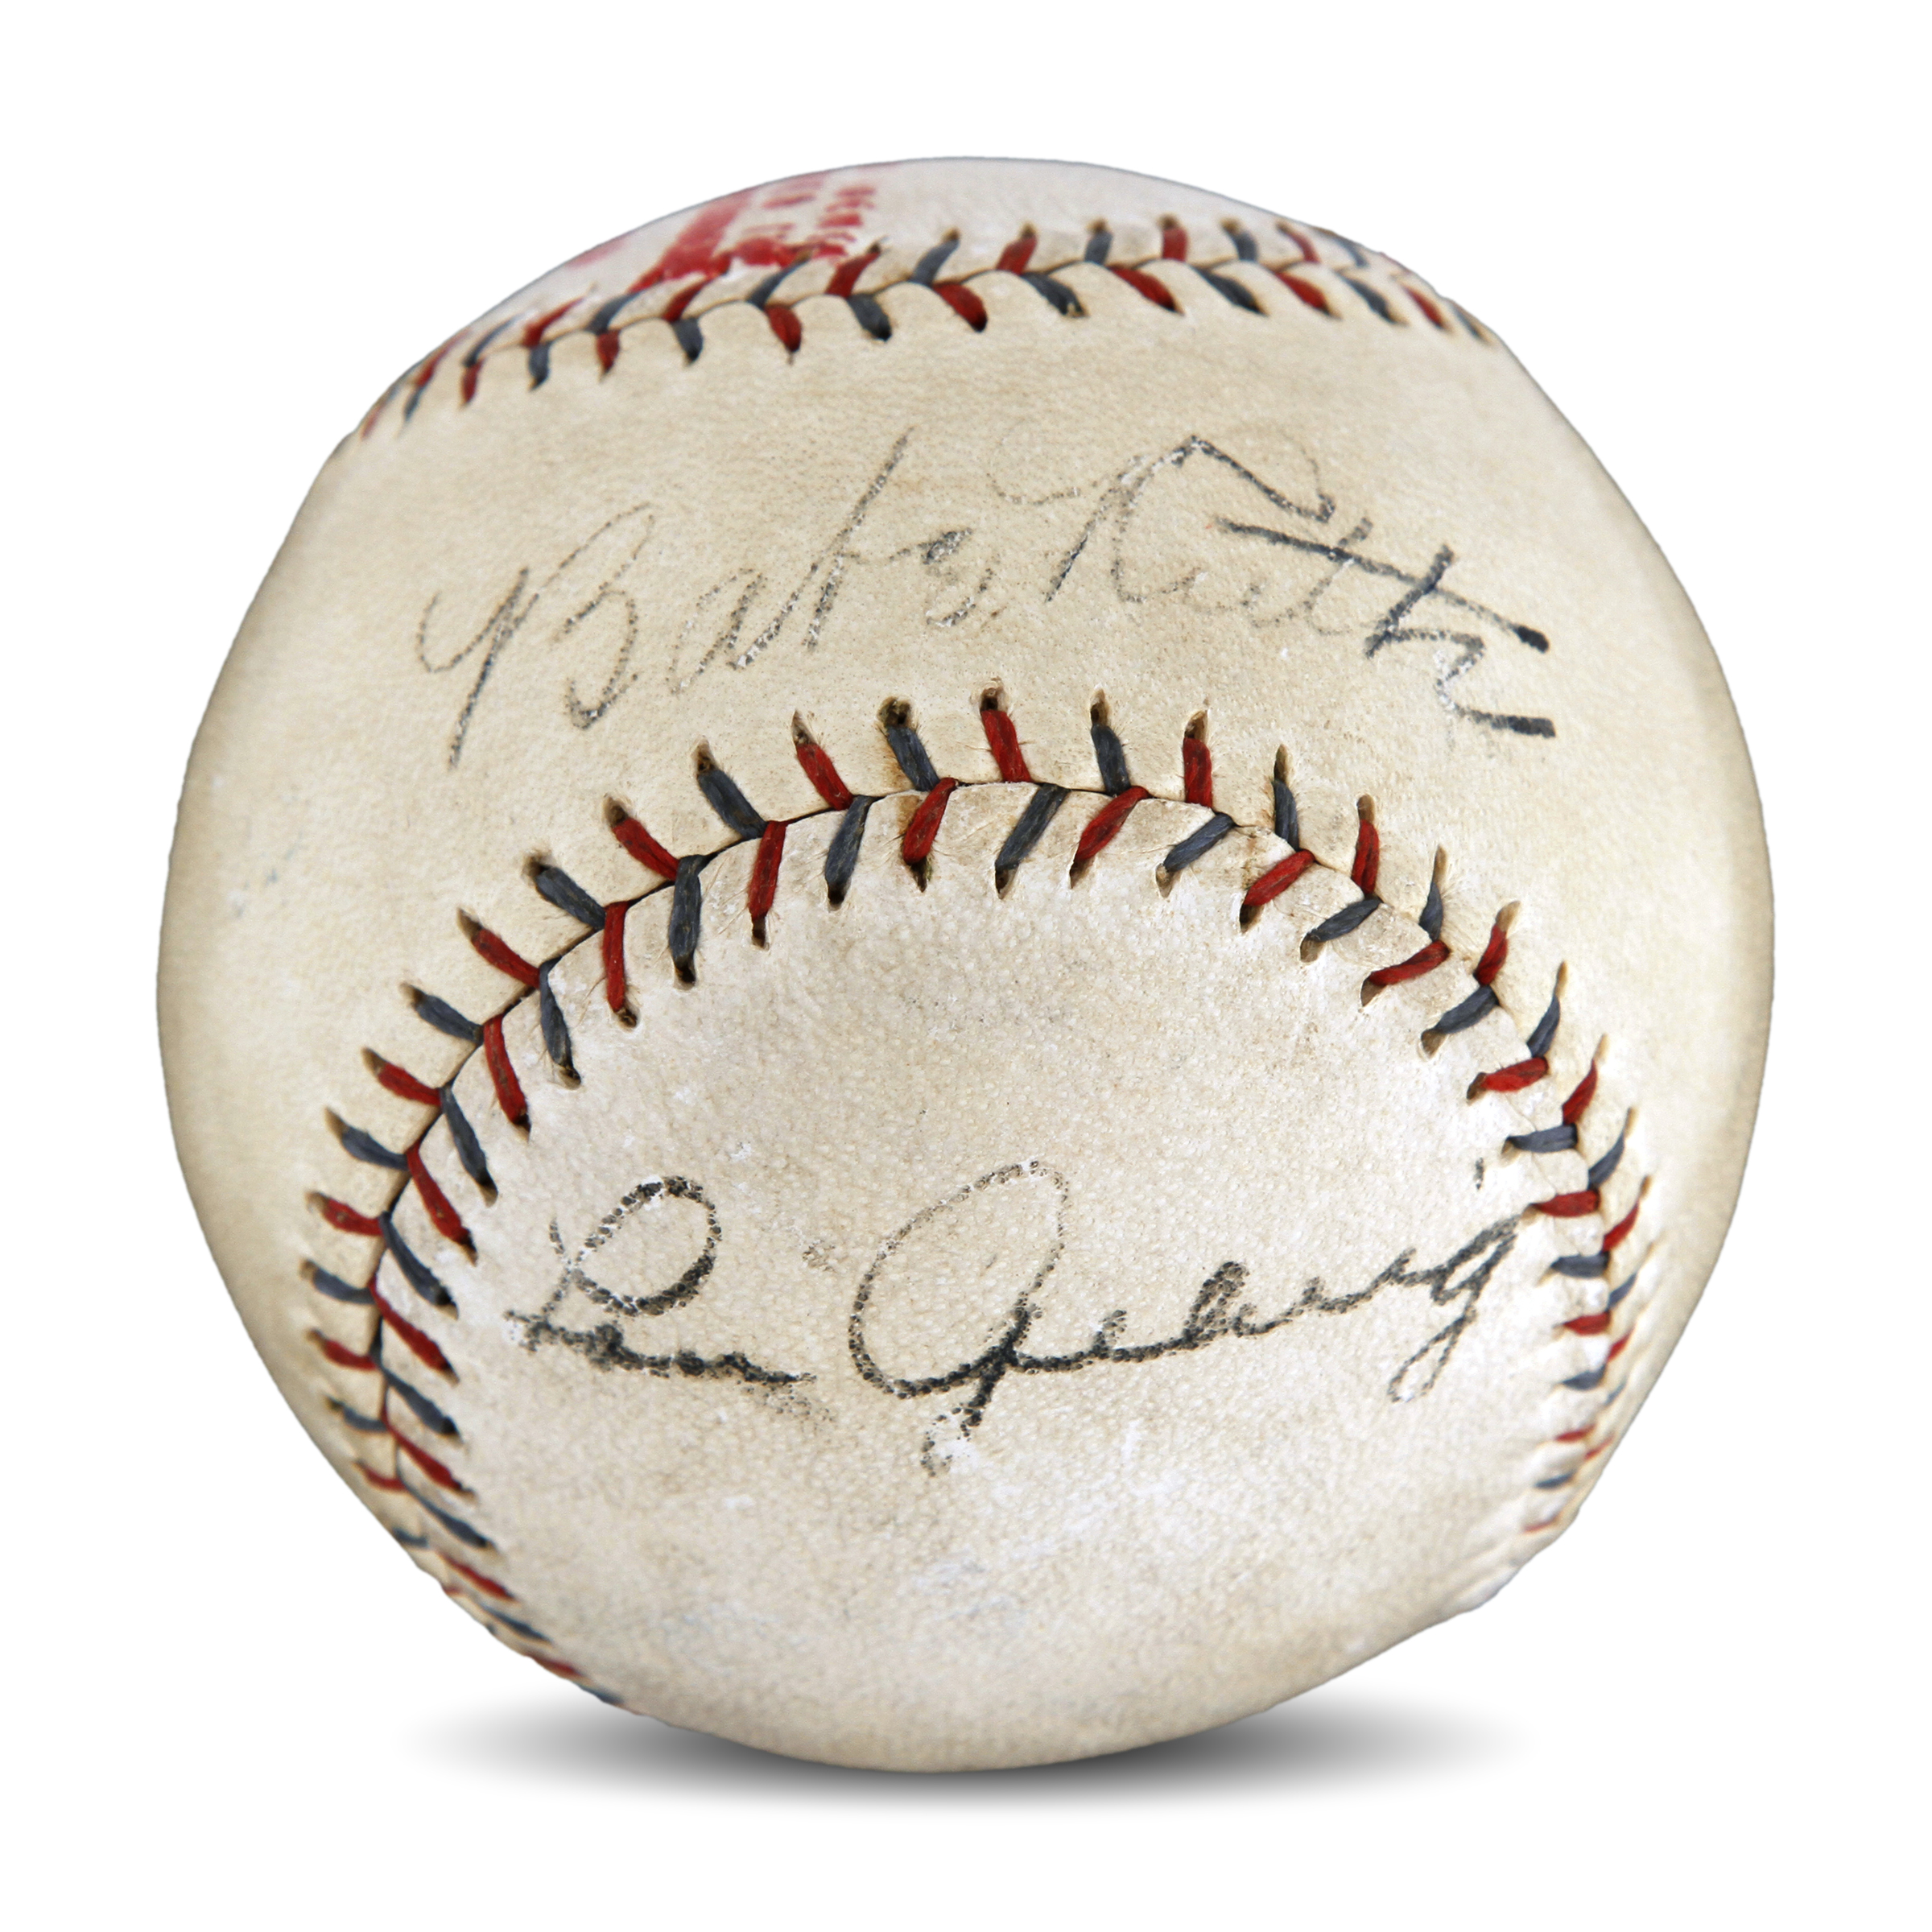 Babe Ruth and Lou Gehrig Dual Signed 1926-27 Ban Johnson OAL Baseball.